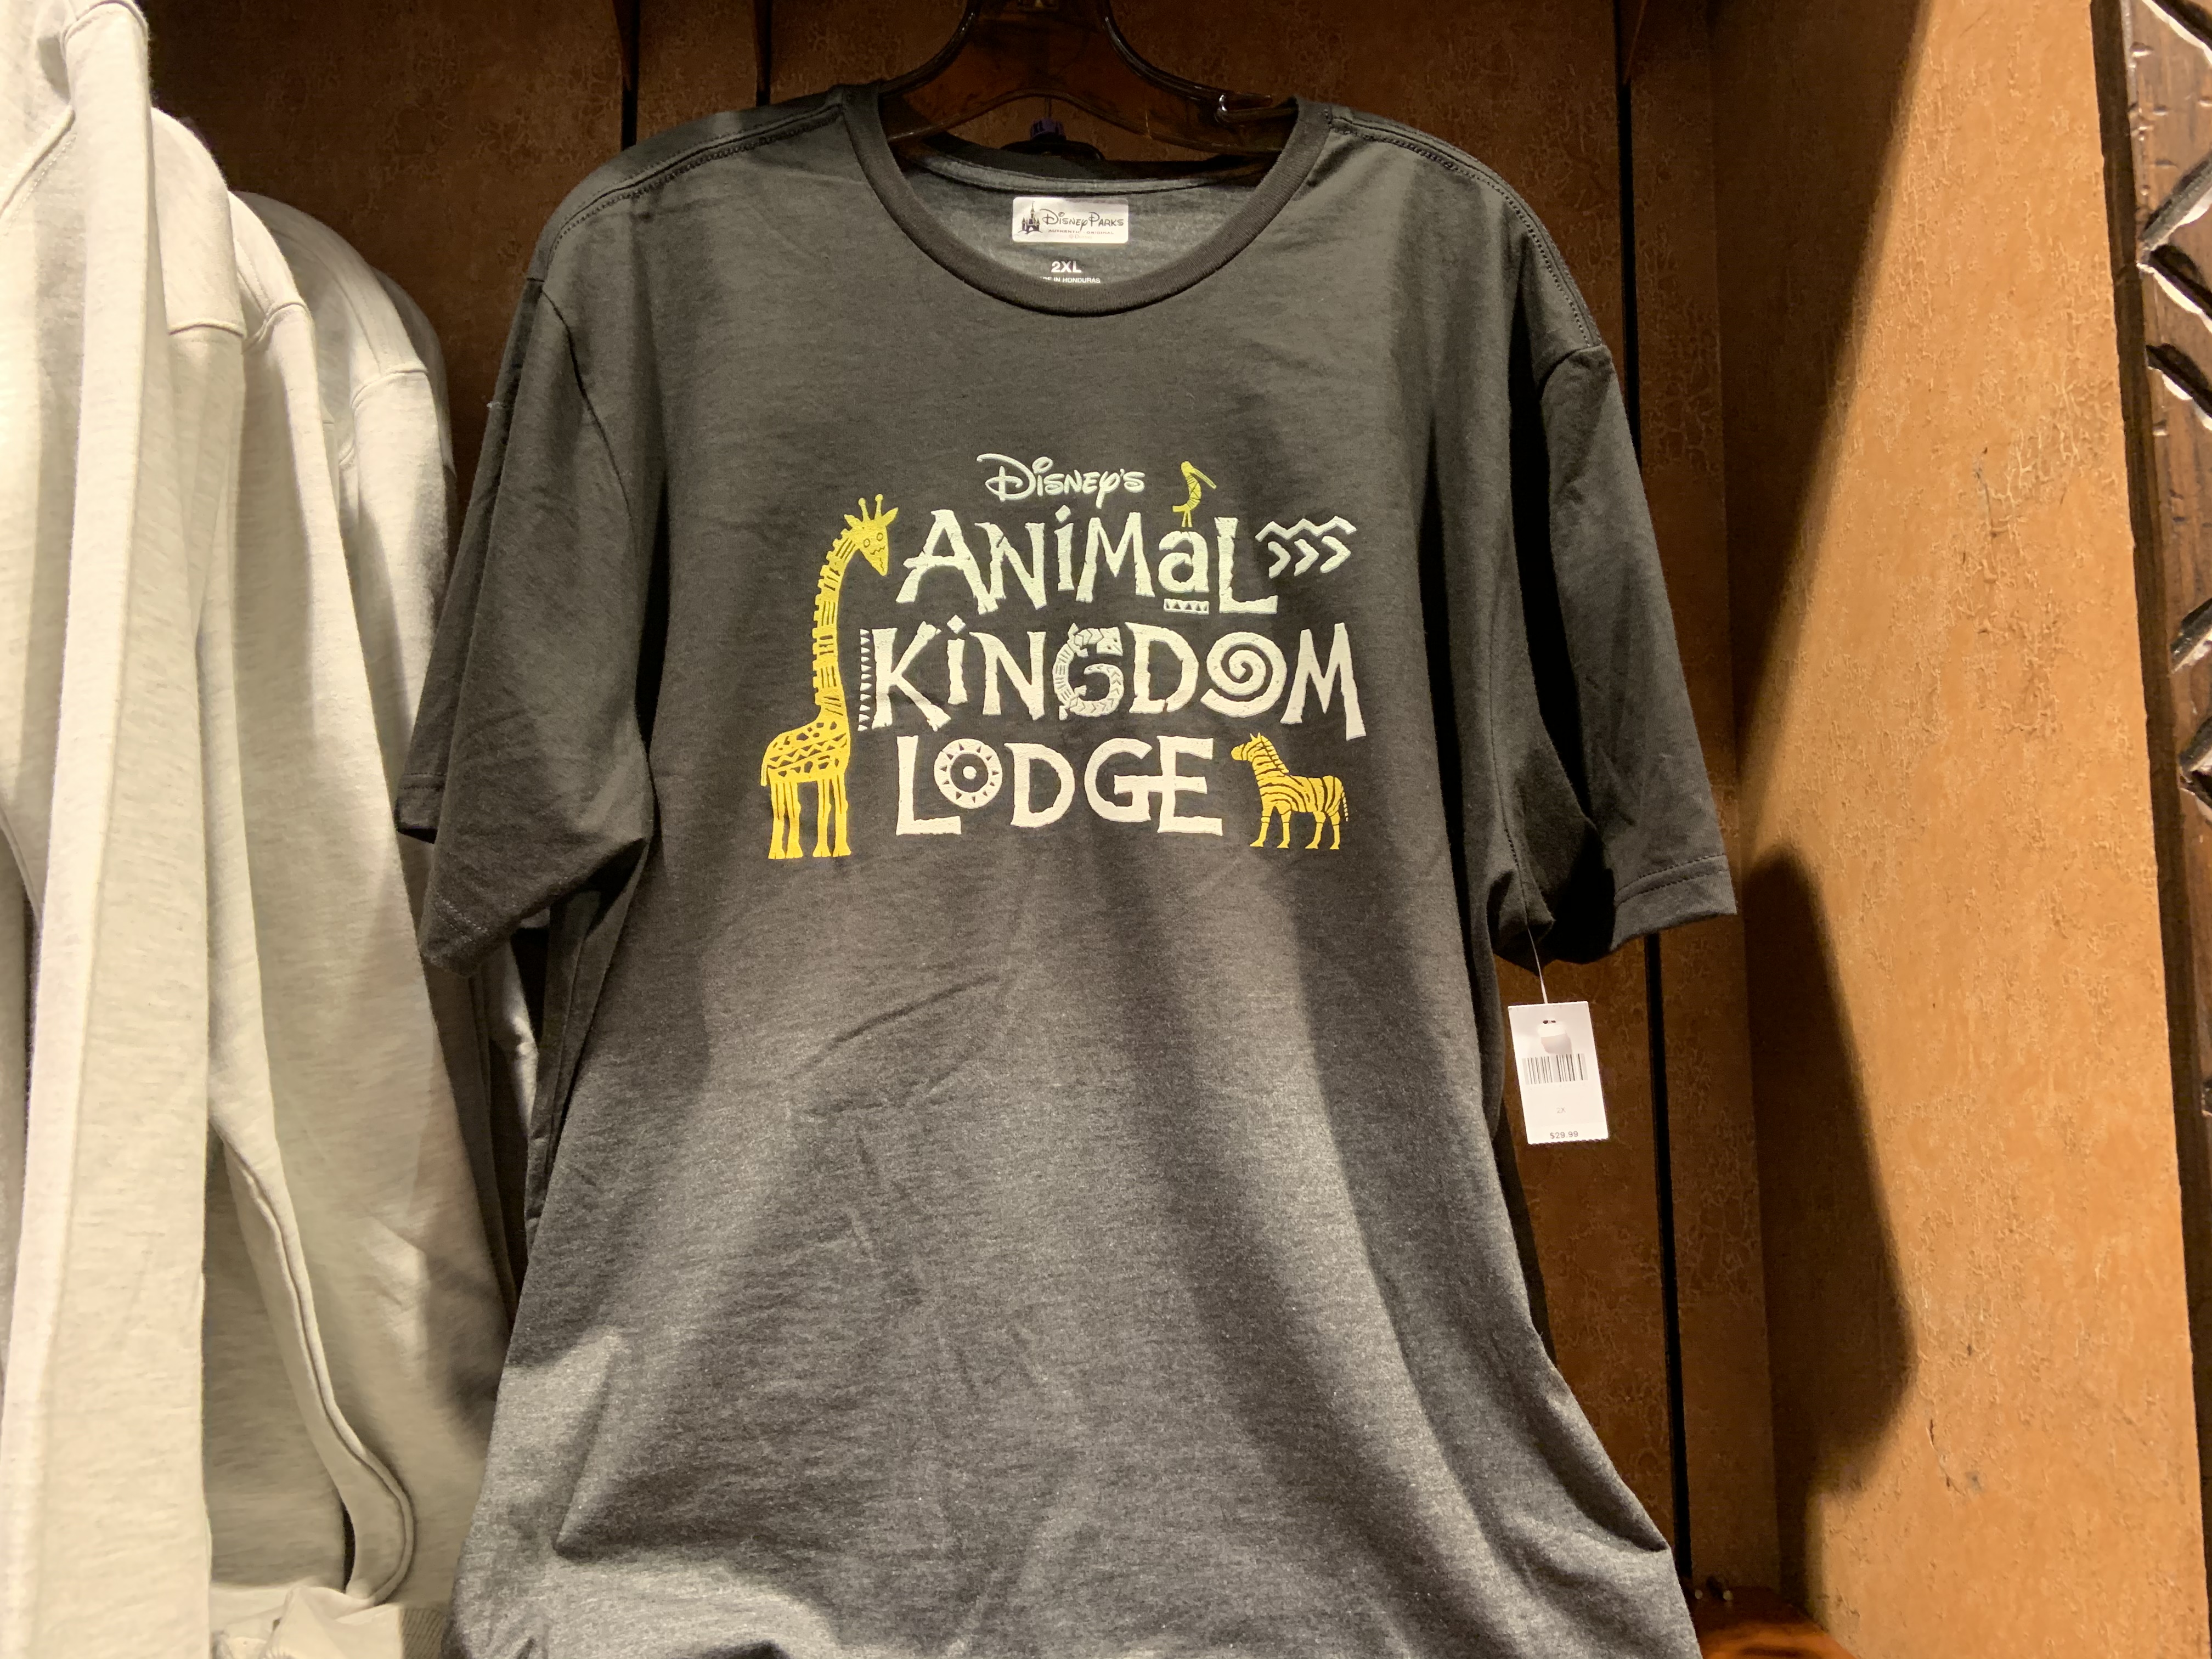 Animal Kingdom Lodge Merchandise 11/25/19 1